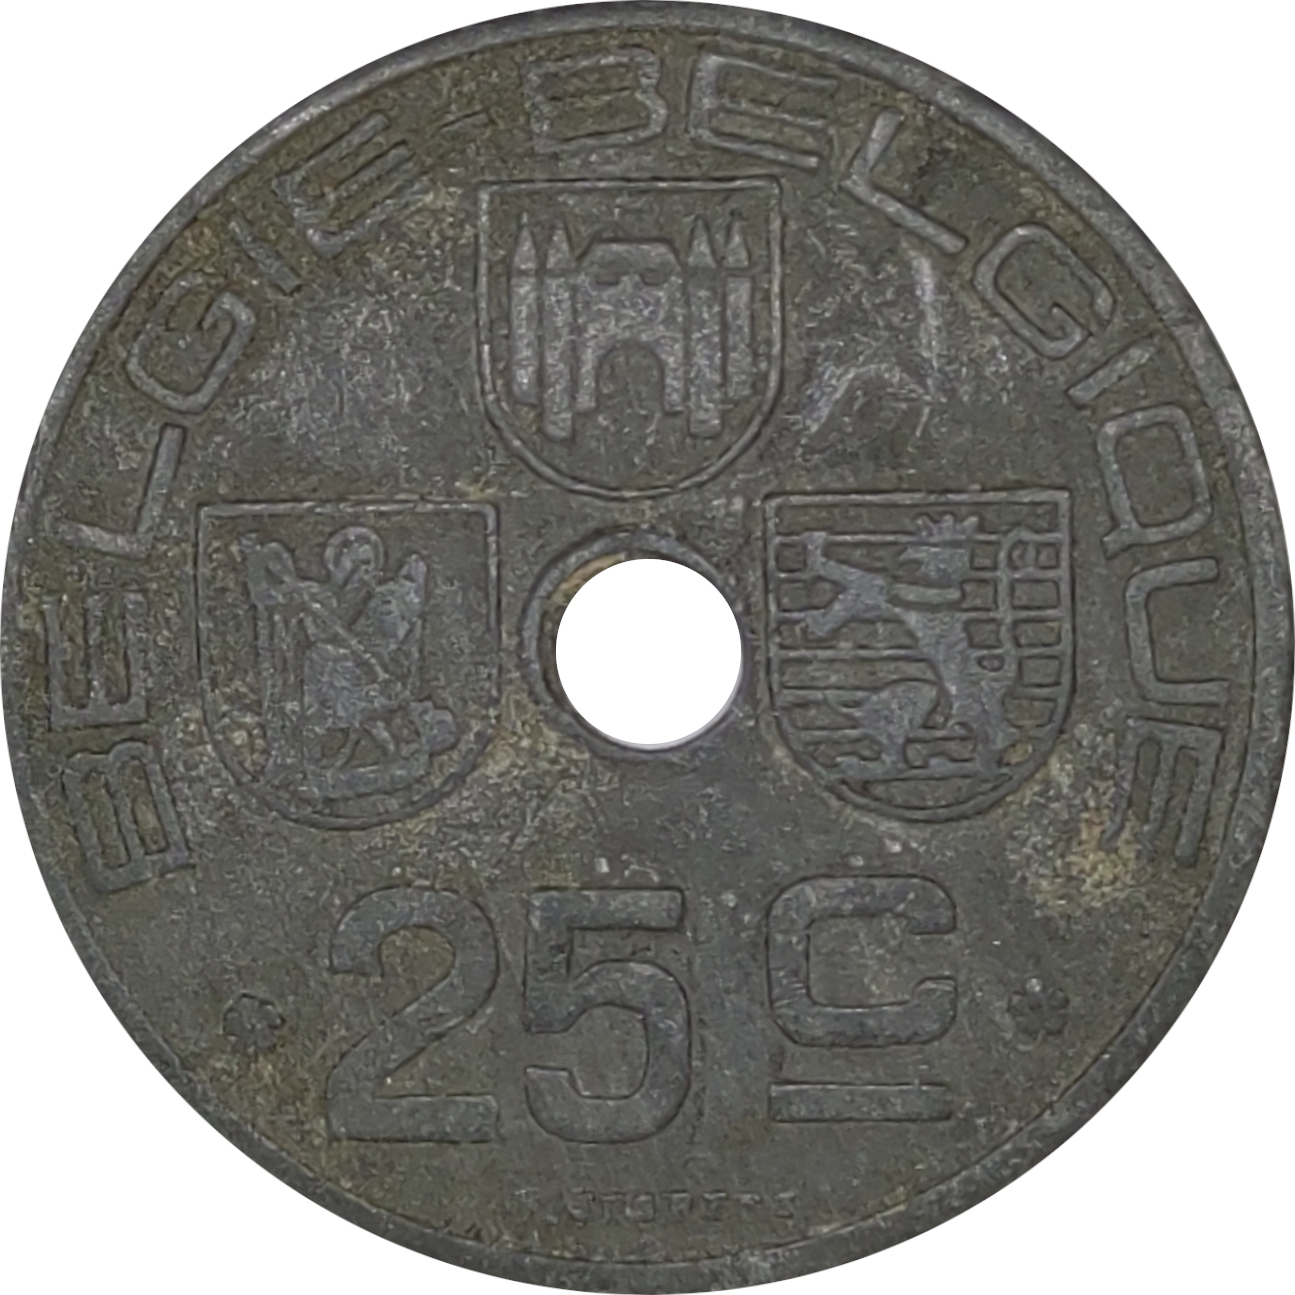 25 centimes - Leopold III